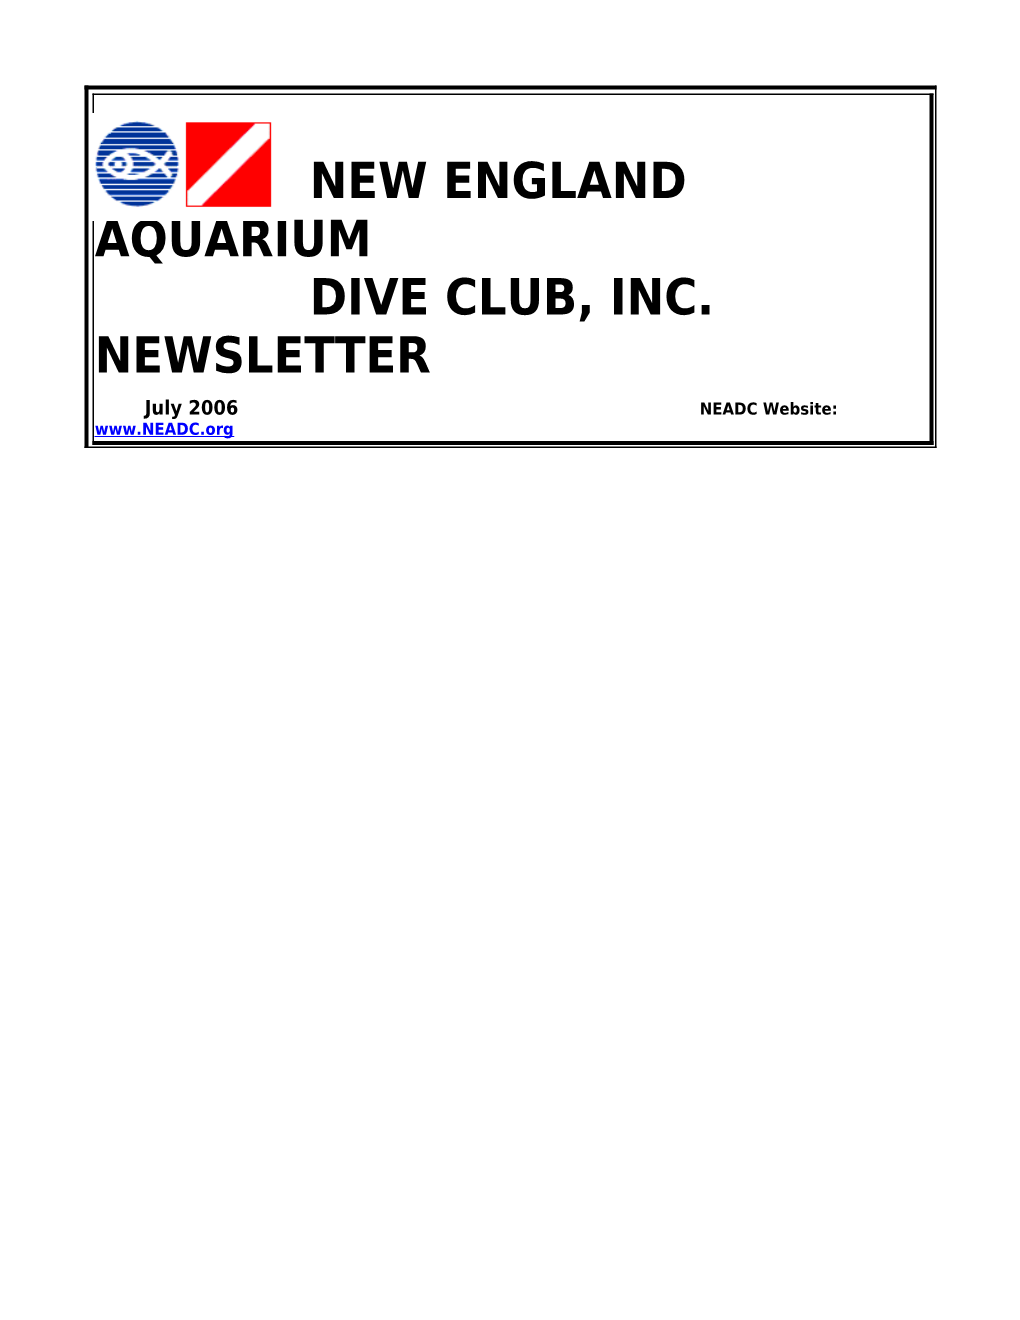 New England Aquarium Dive Club, Inc. Newsletter